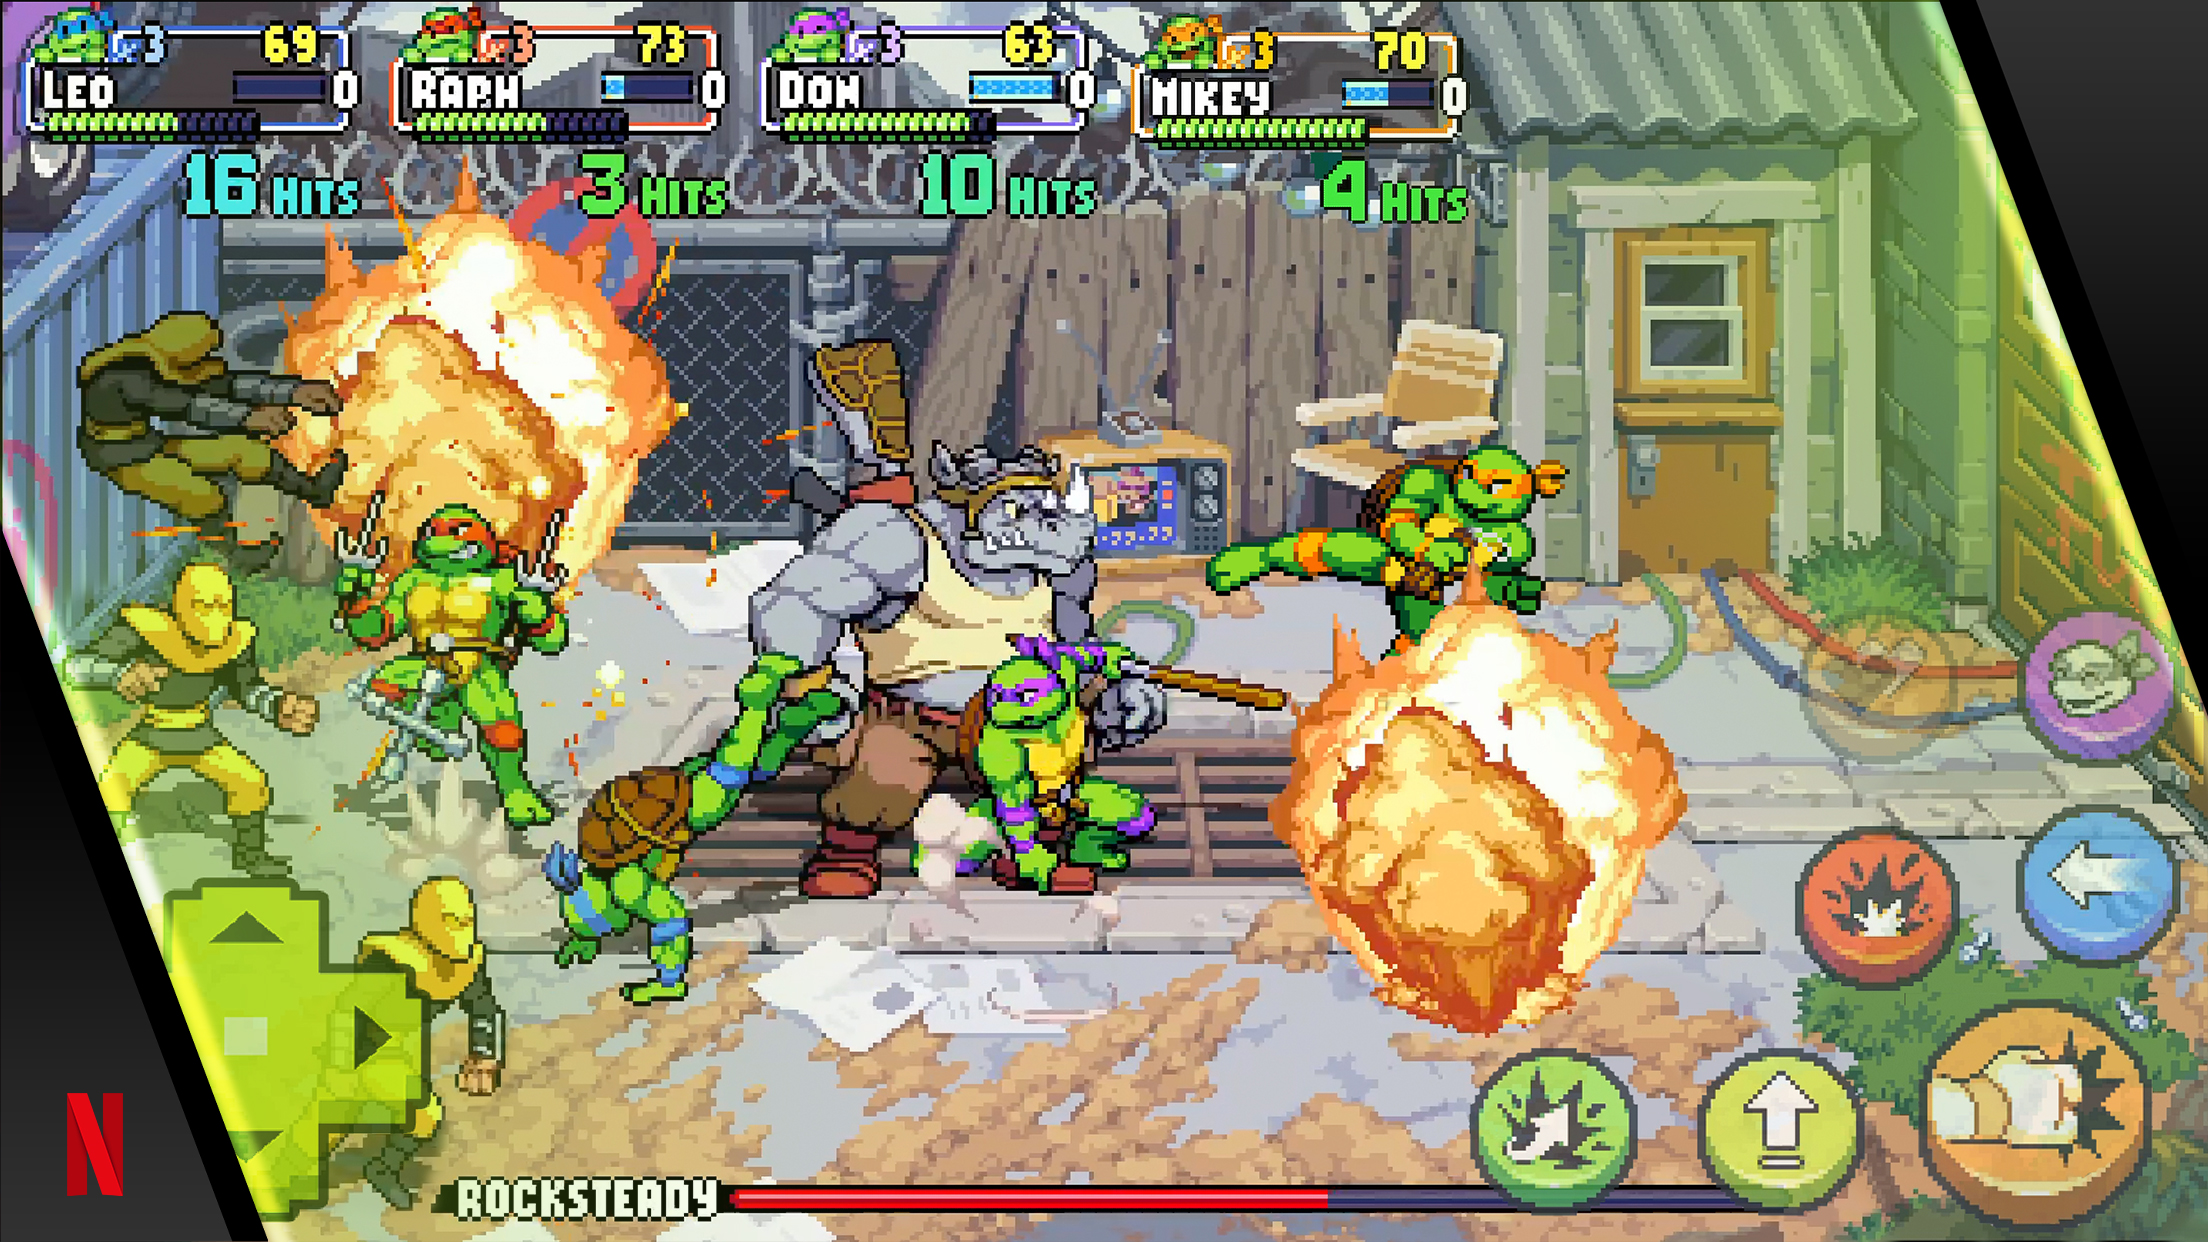 Turtles battle Rocksteady in Teenage Mutant Ninja Turtles: Shredder's Revenge on mobile.